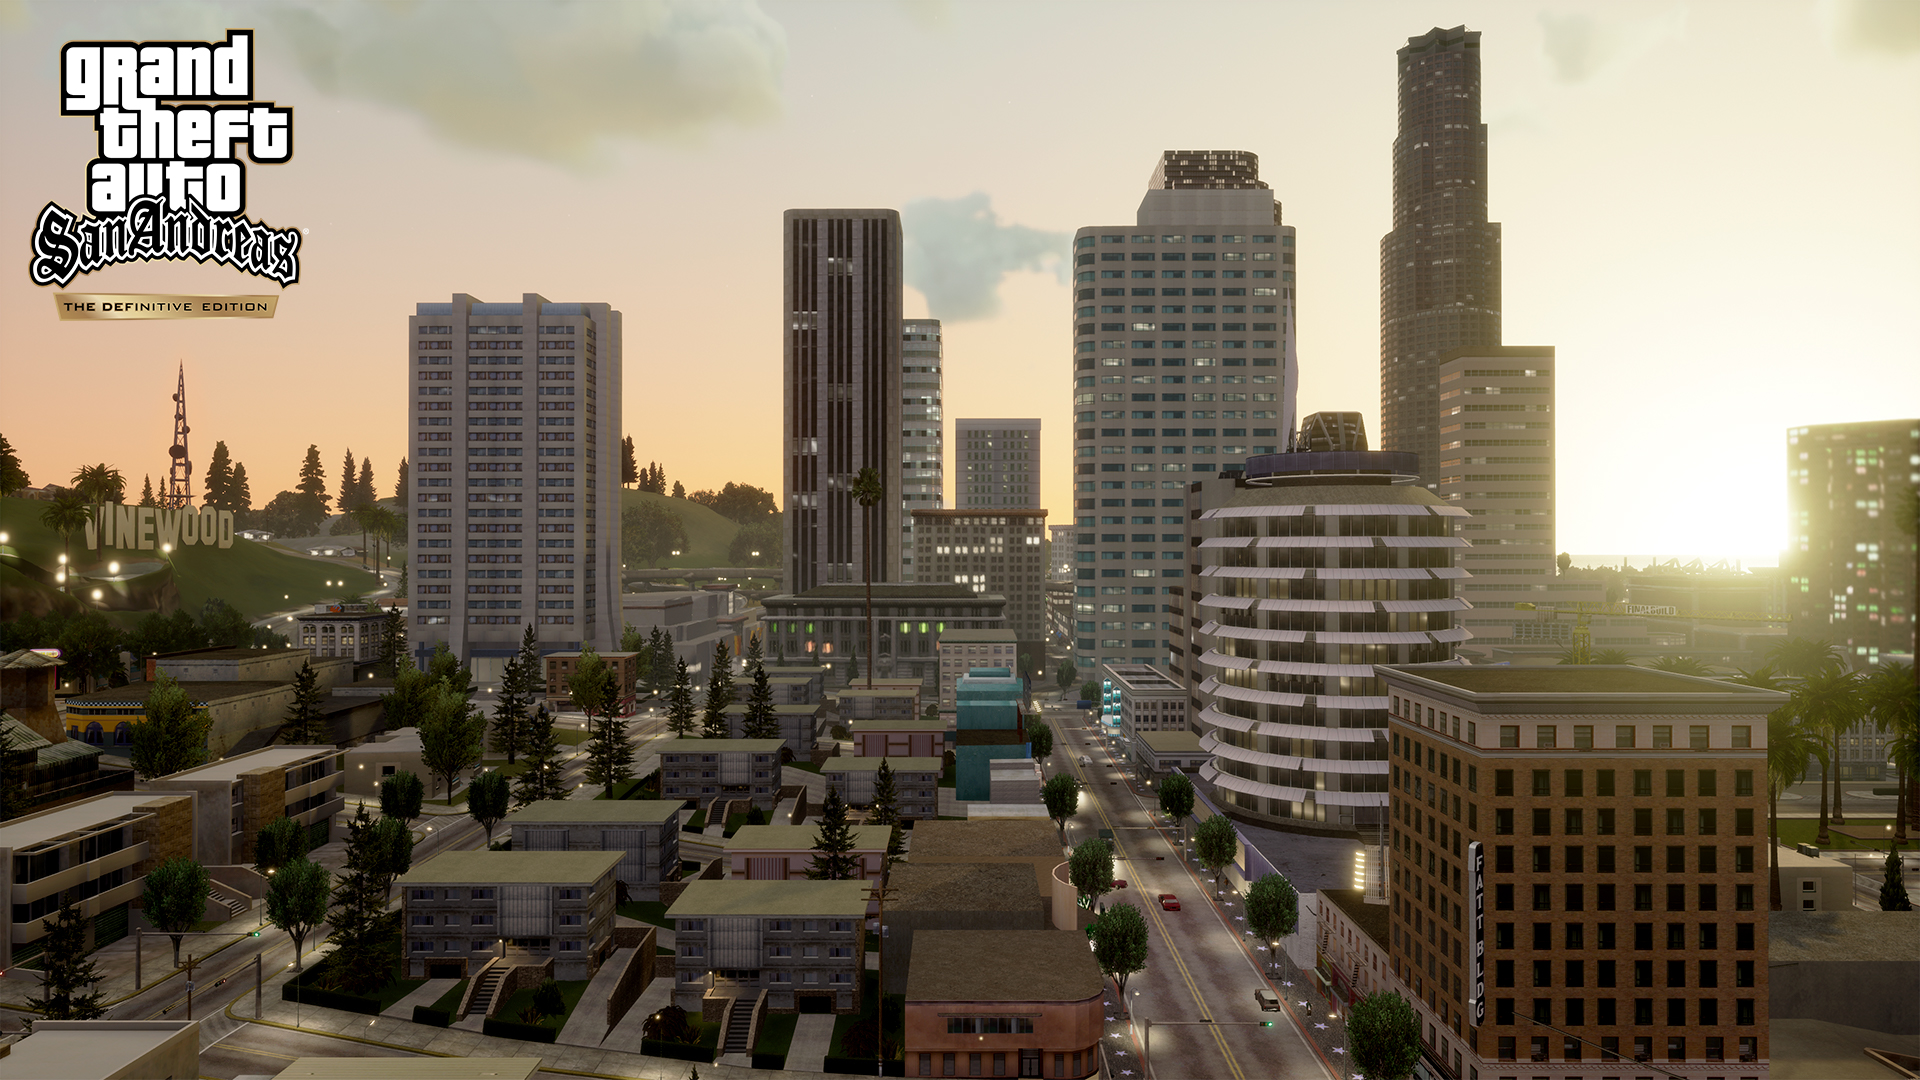 A panoramic view of GTA San Andreas.